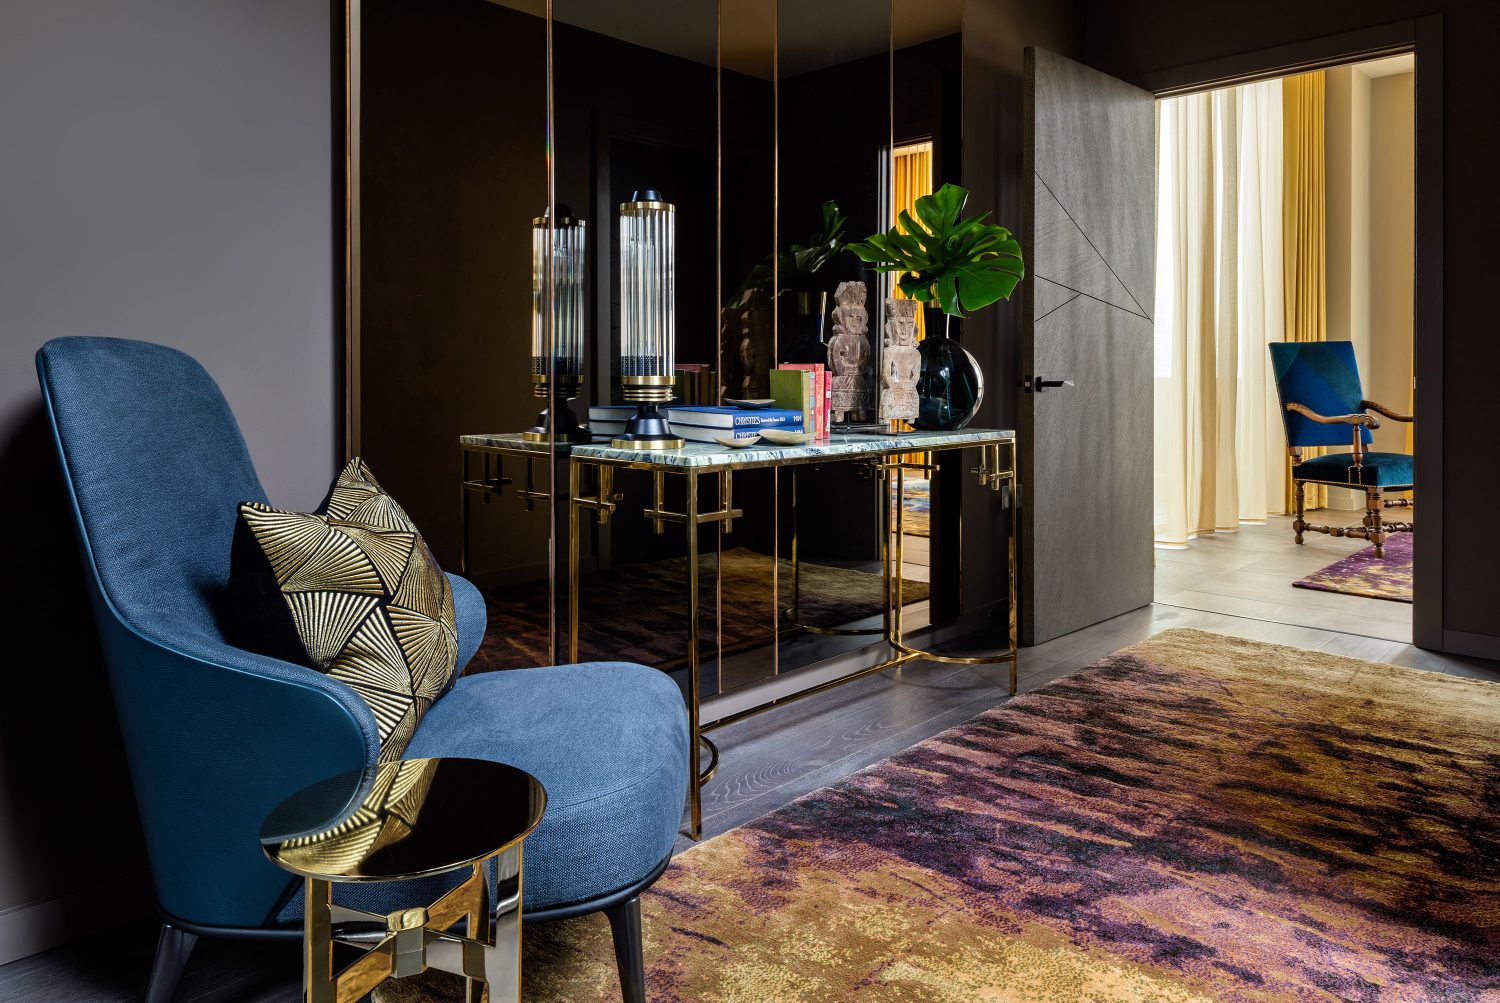 Daniel Hopwood Dollar Bay penthouse design. Blue chairs and purple rug